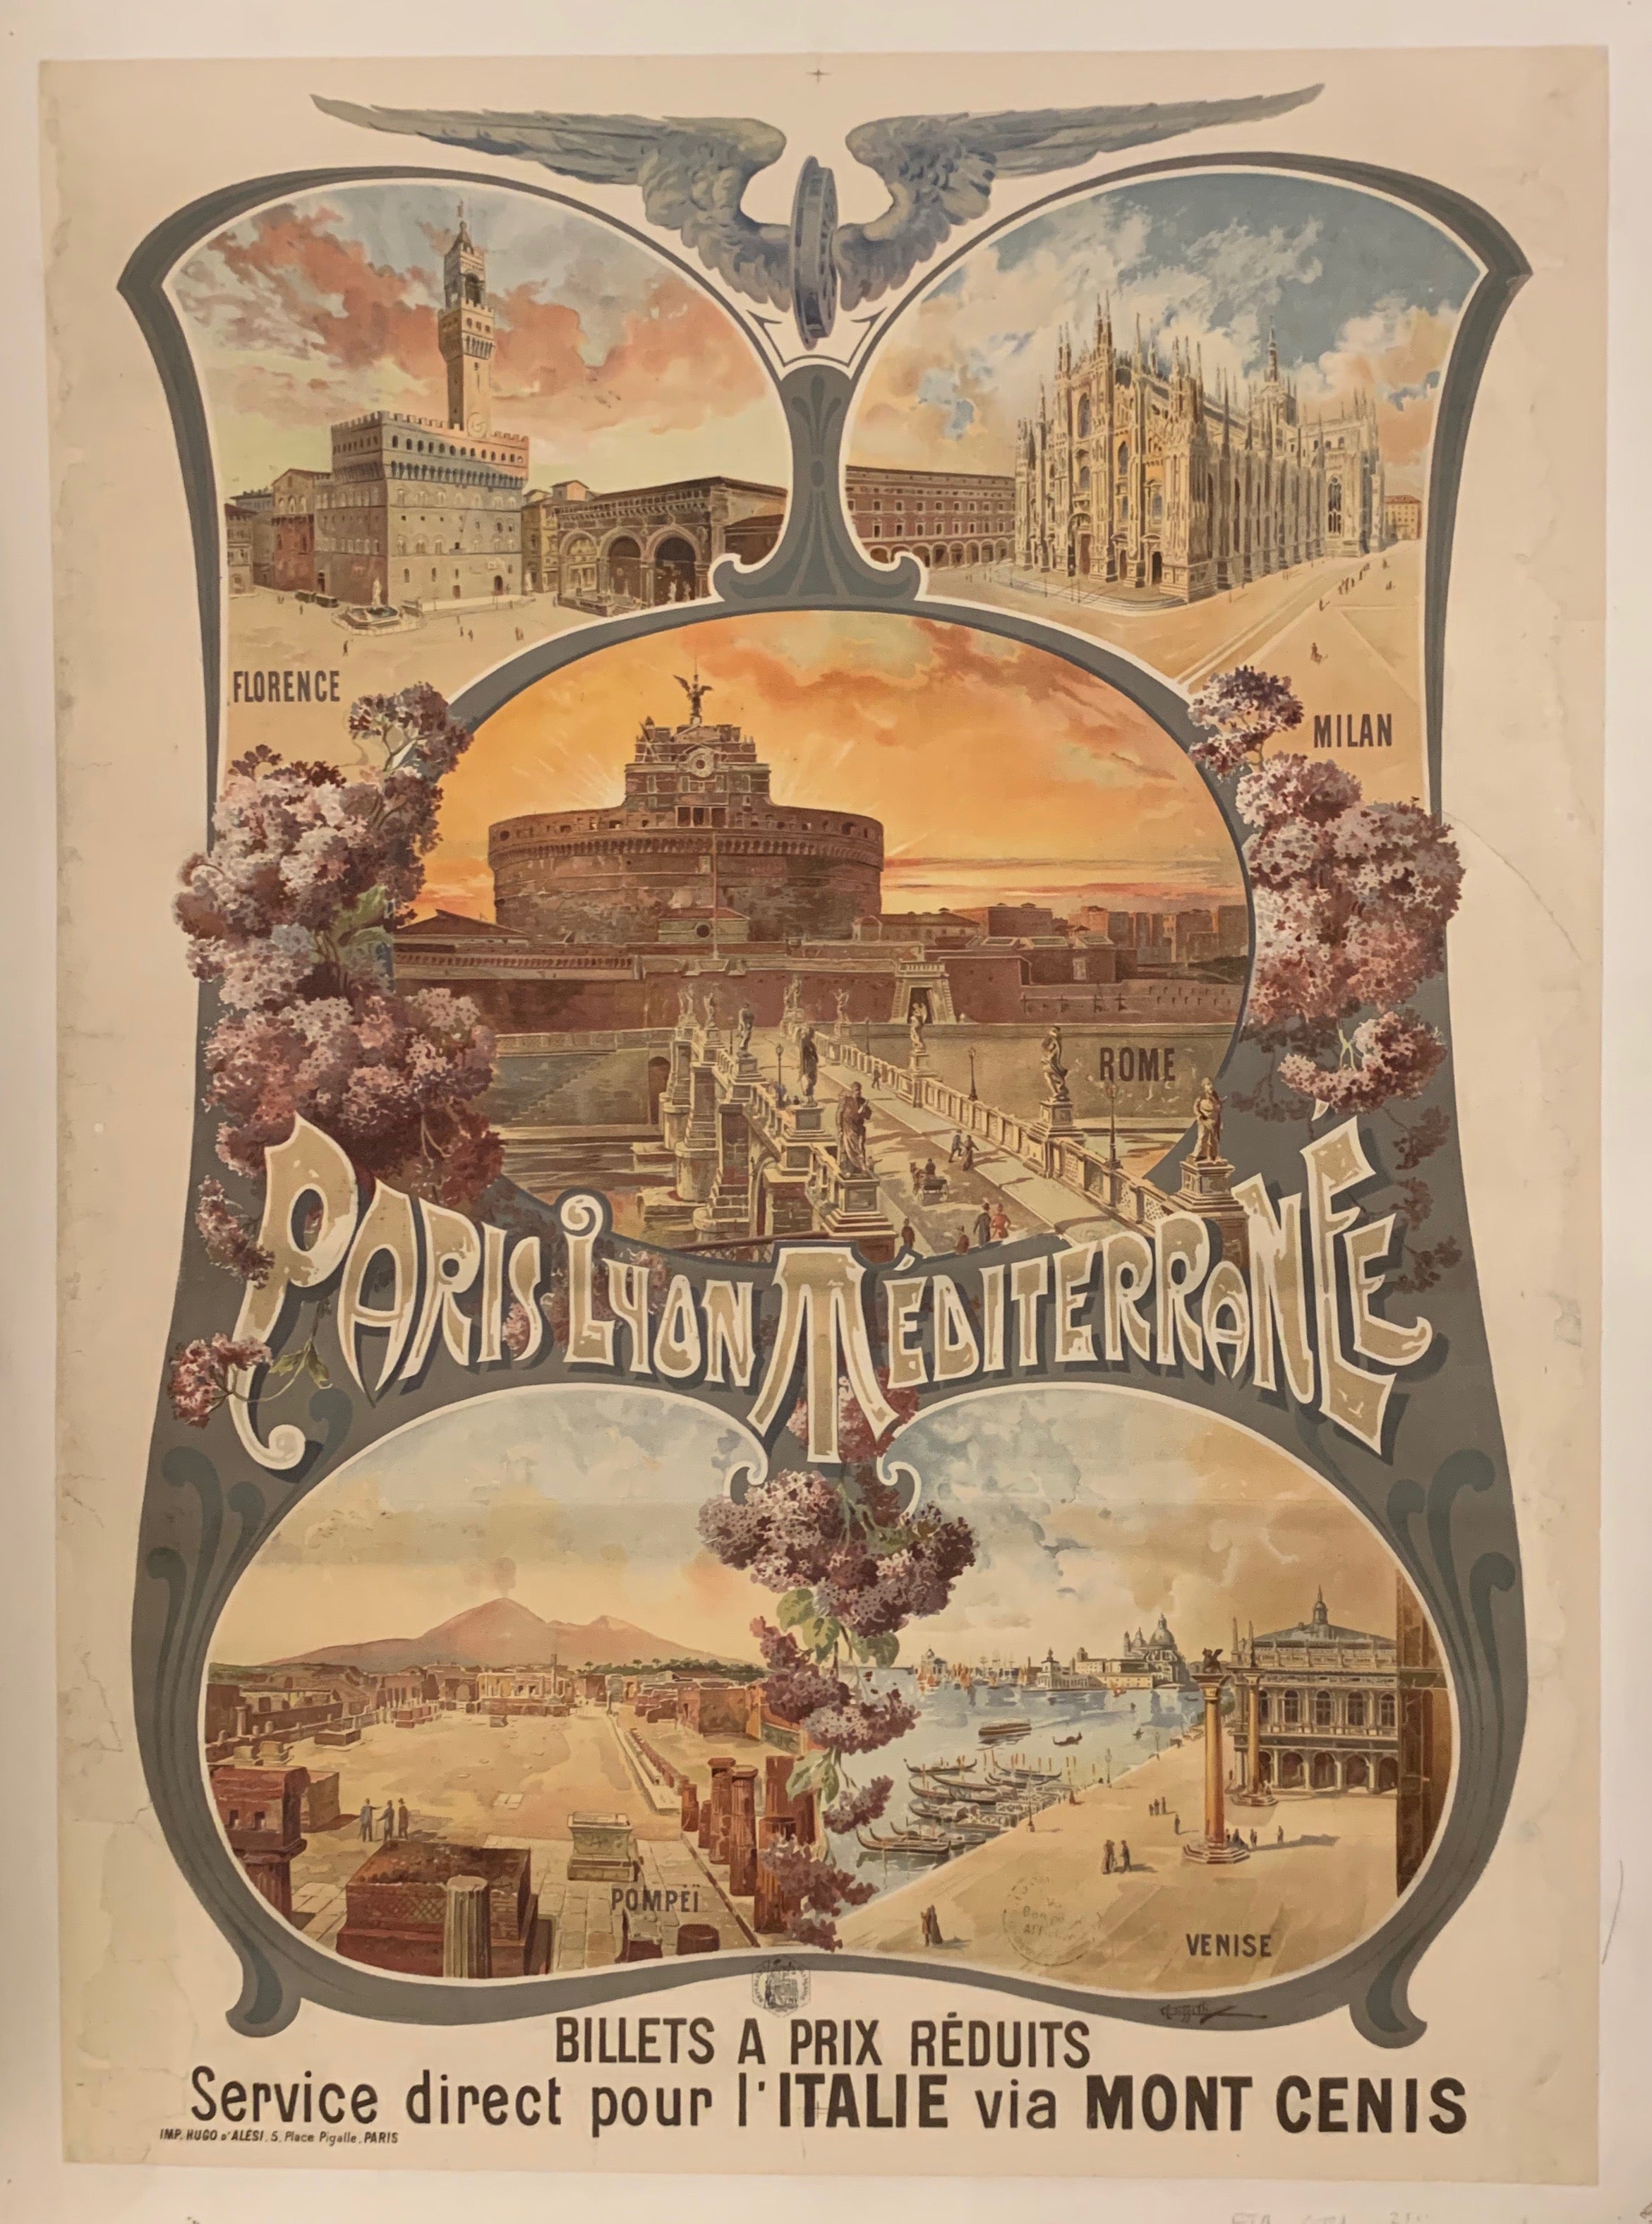 Paris Lyon Mediterranee Poster ✓